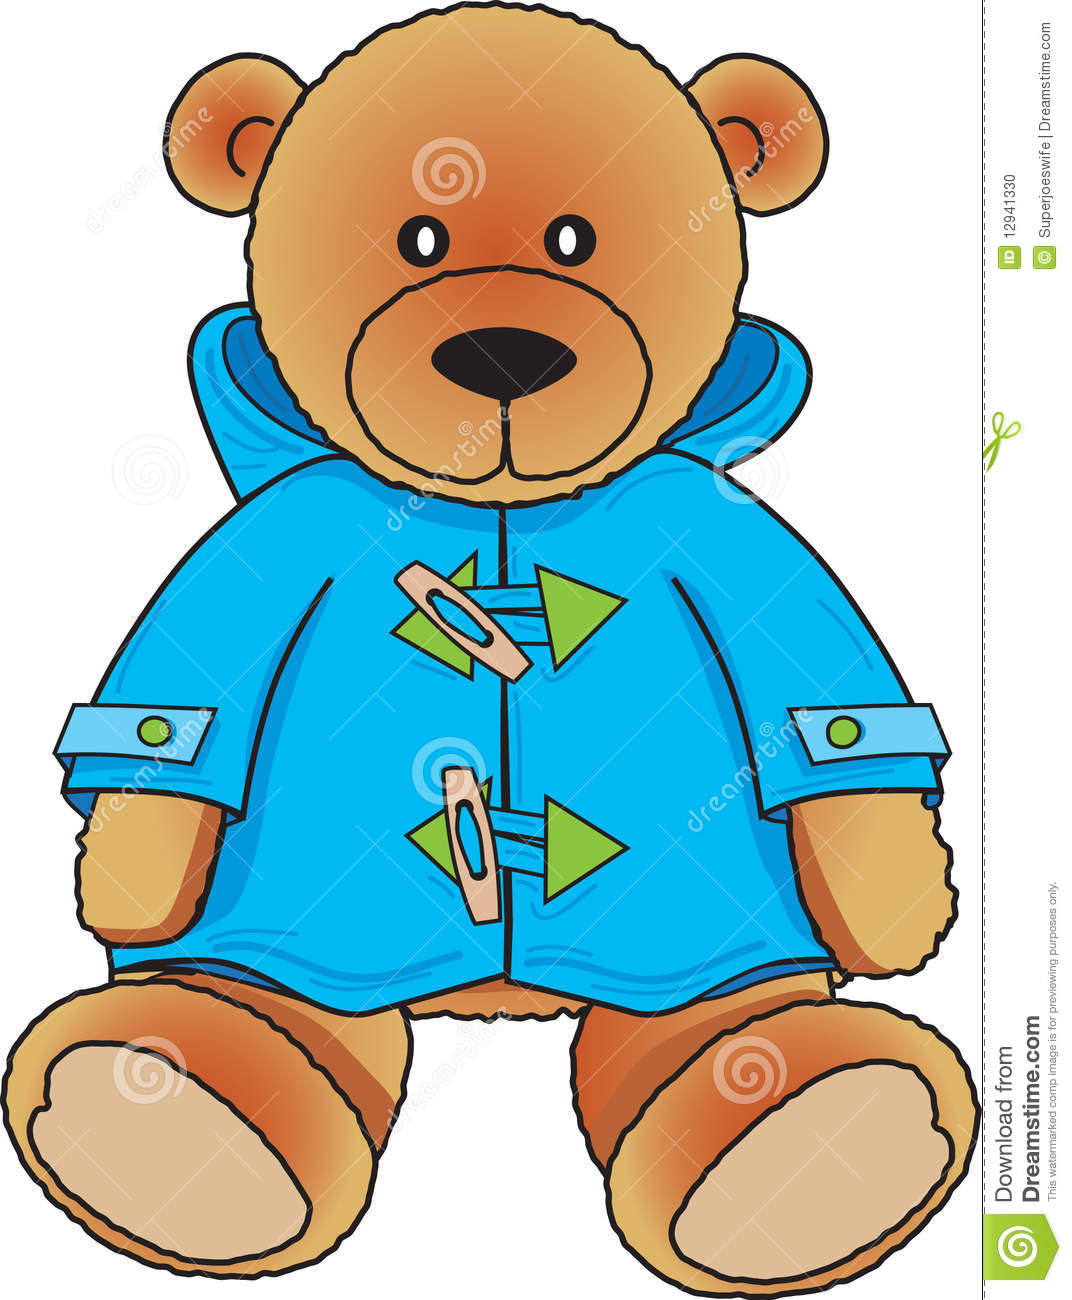 Clip Art Of A Blue Teddy Bear Clipart   Cliparthut   Free Clipart